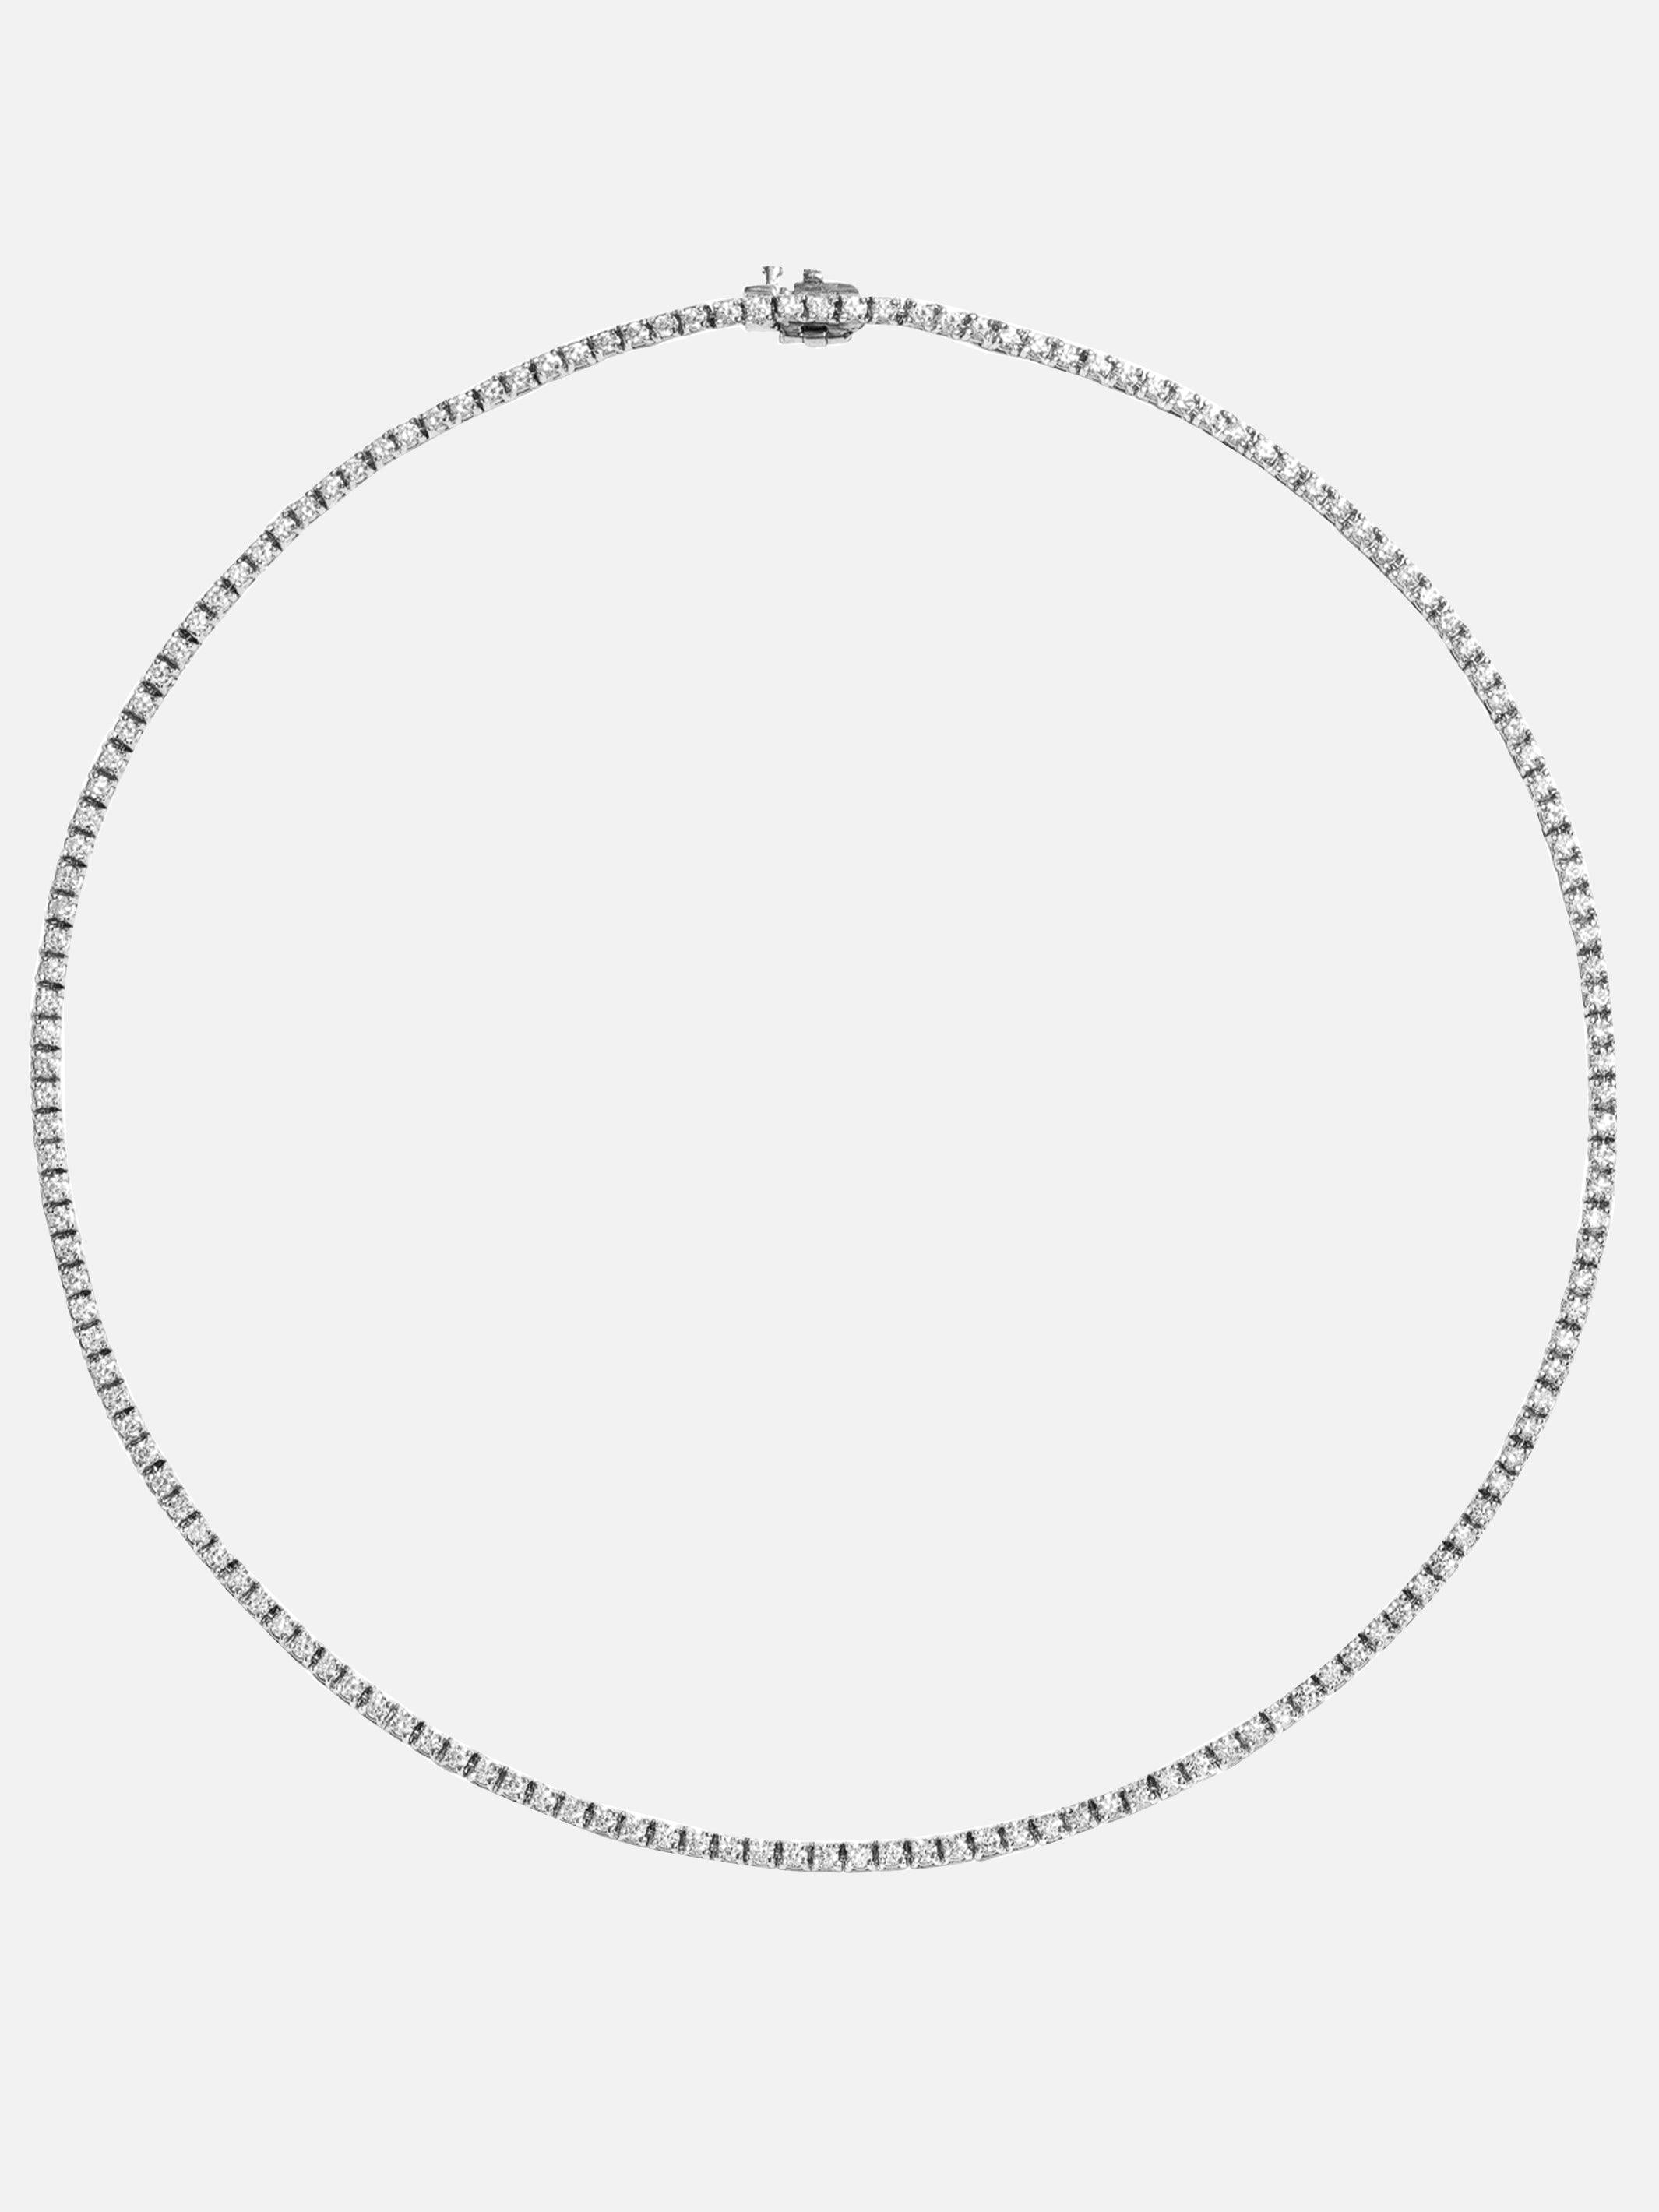 At Present 7.25ct Diamond Tennis Necklace 1